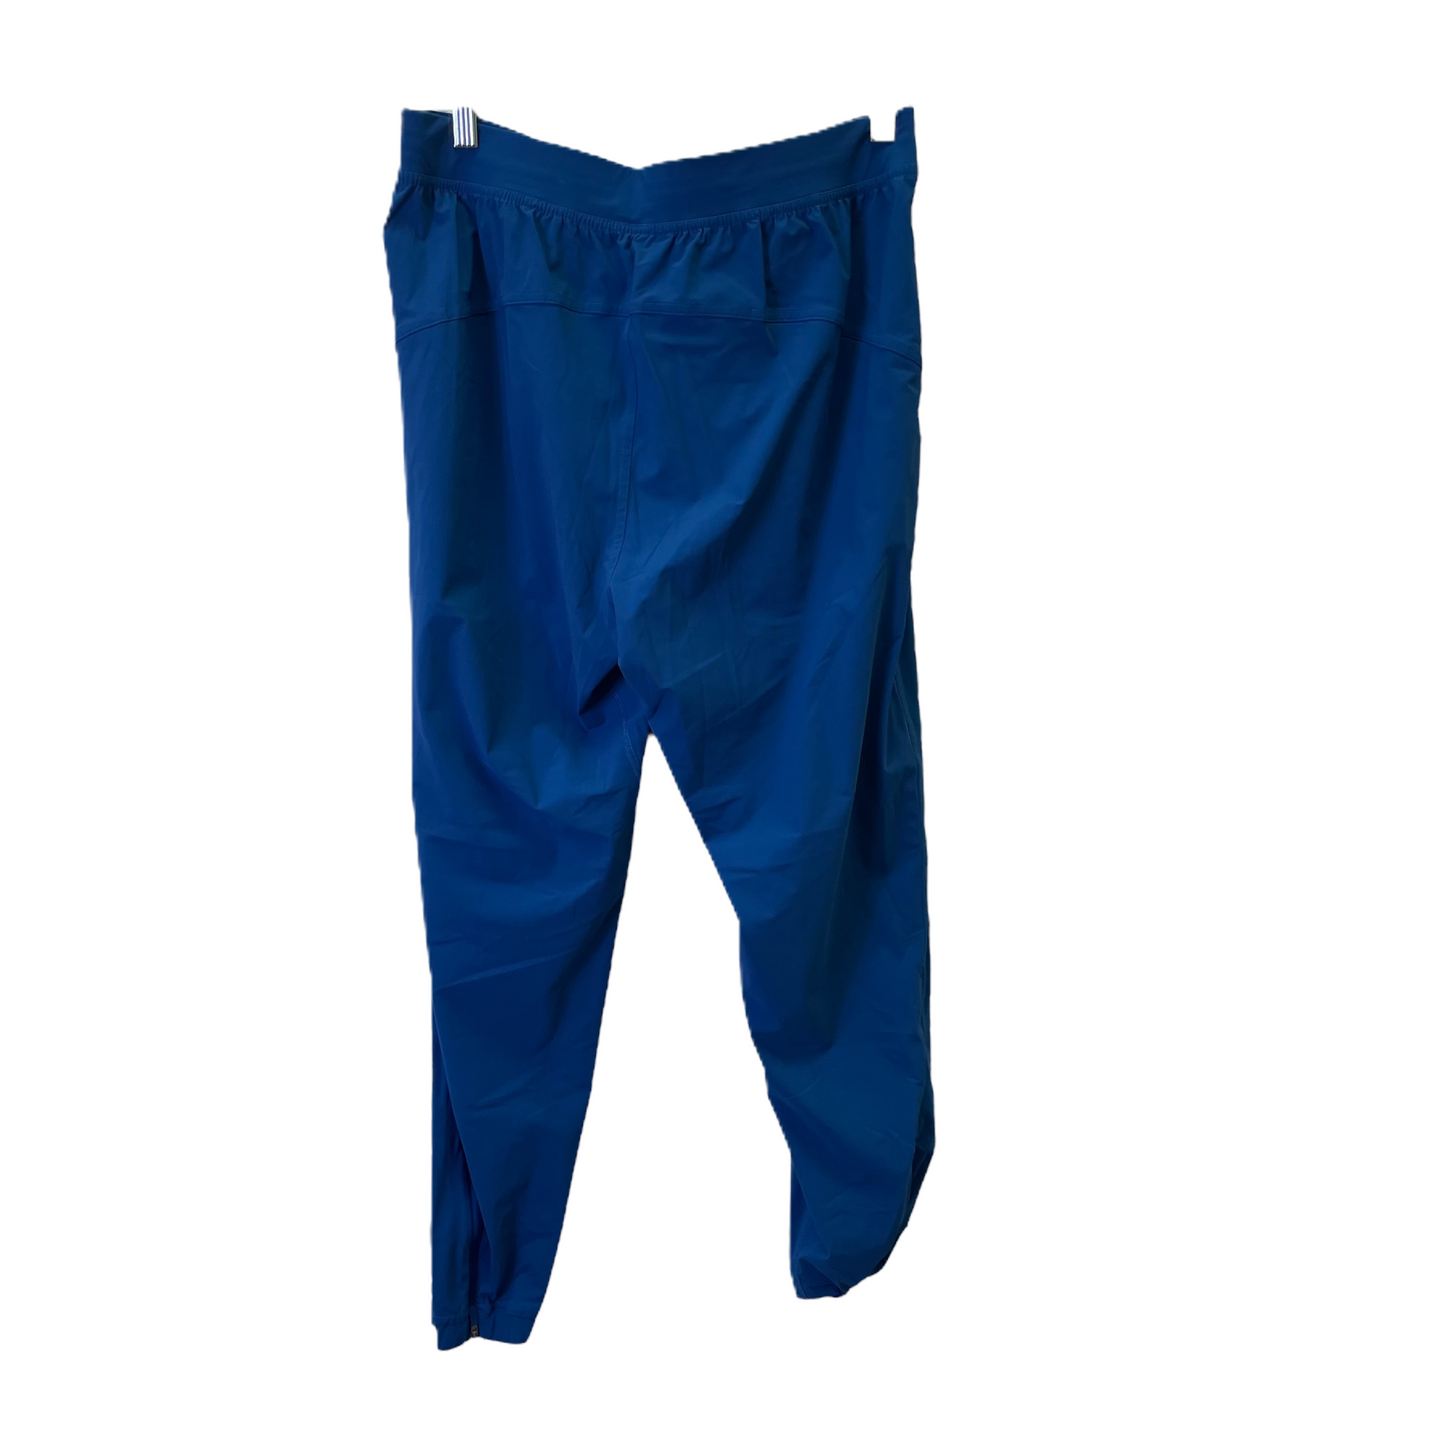 Blue Athletic Pants By Lululemon, Size: 10